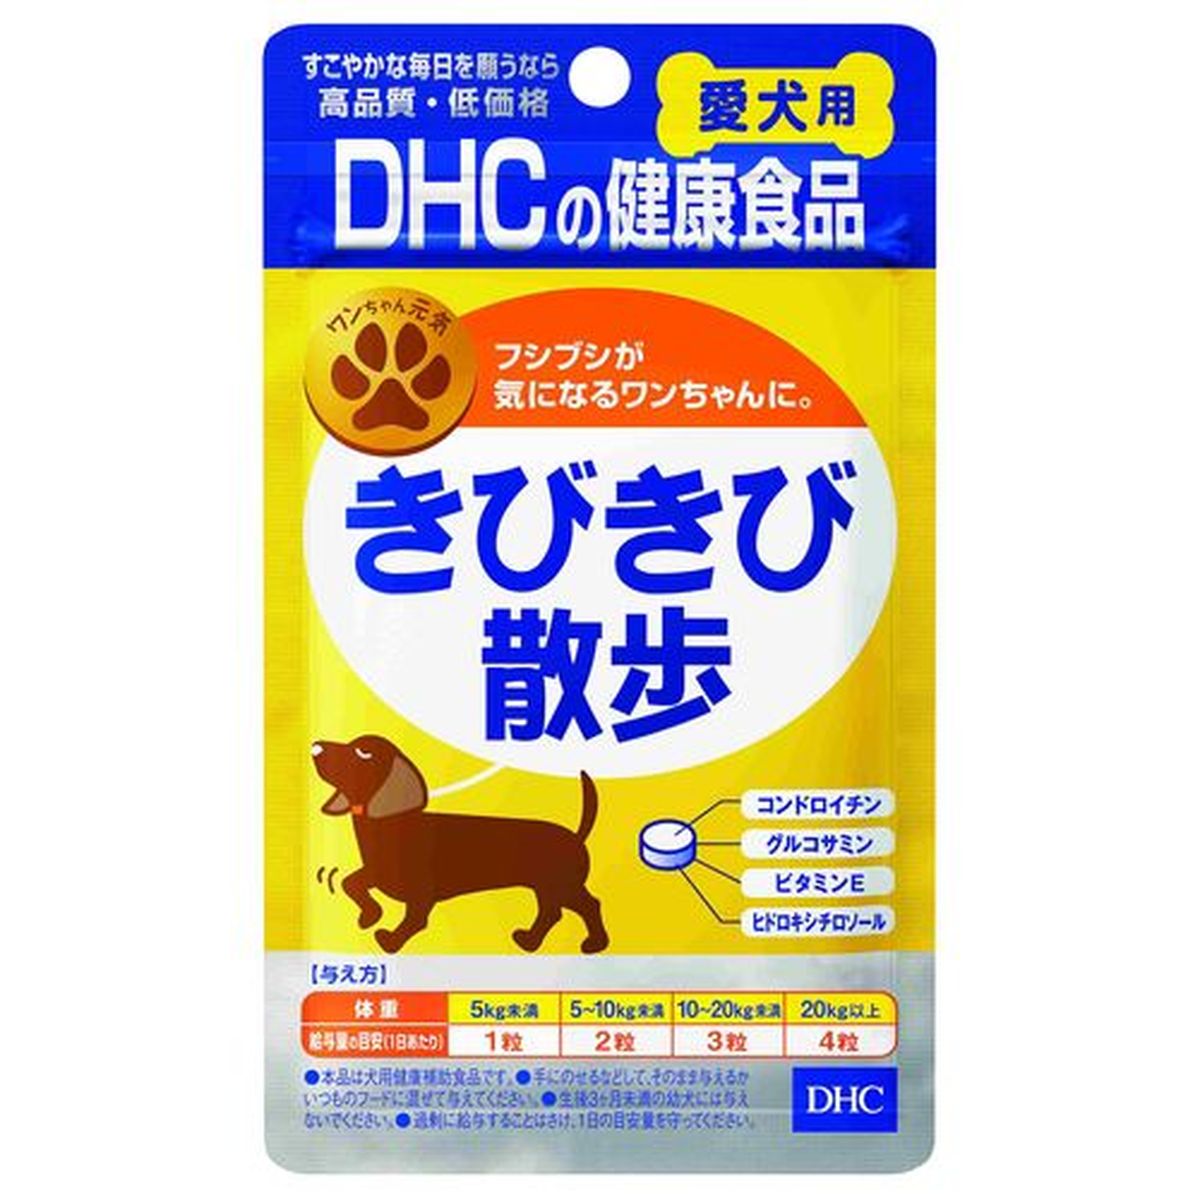 DHC愛犬用キビキビ散歩 60粒×30